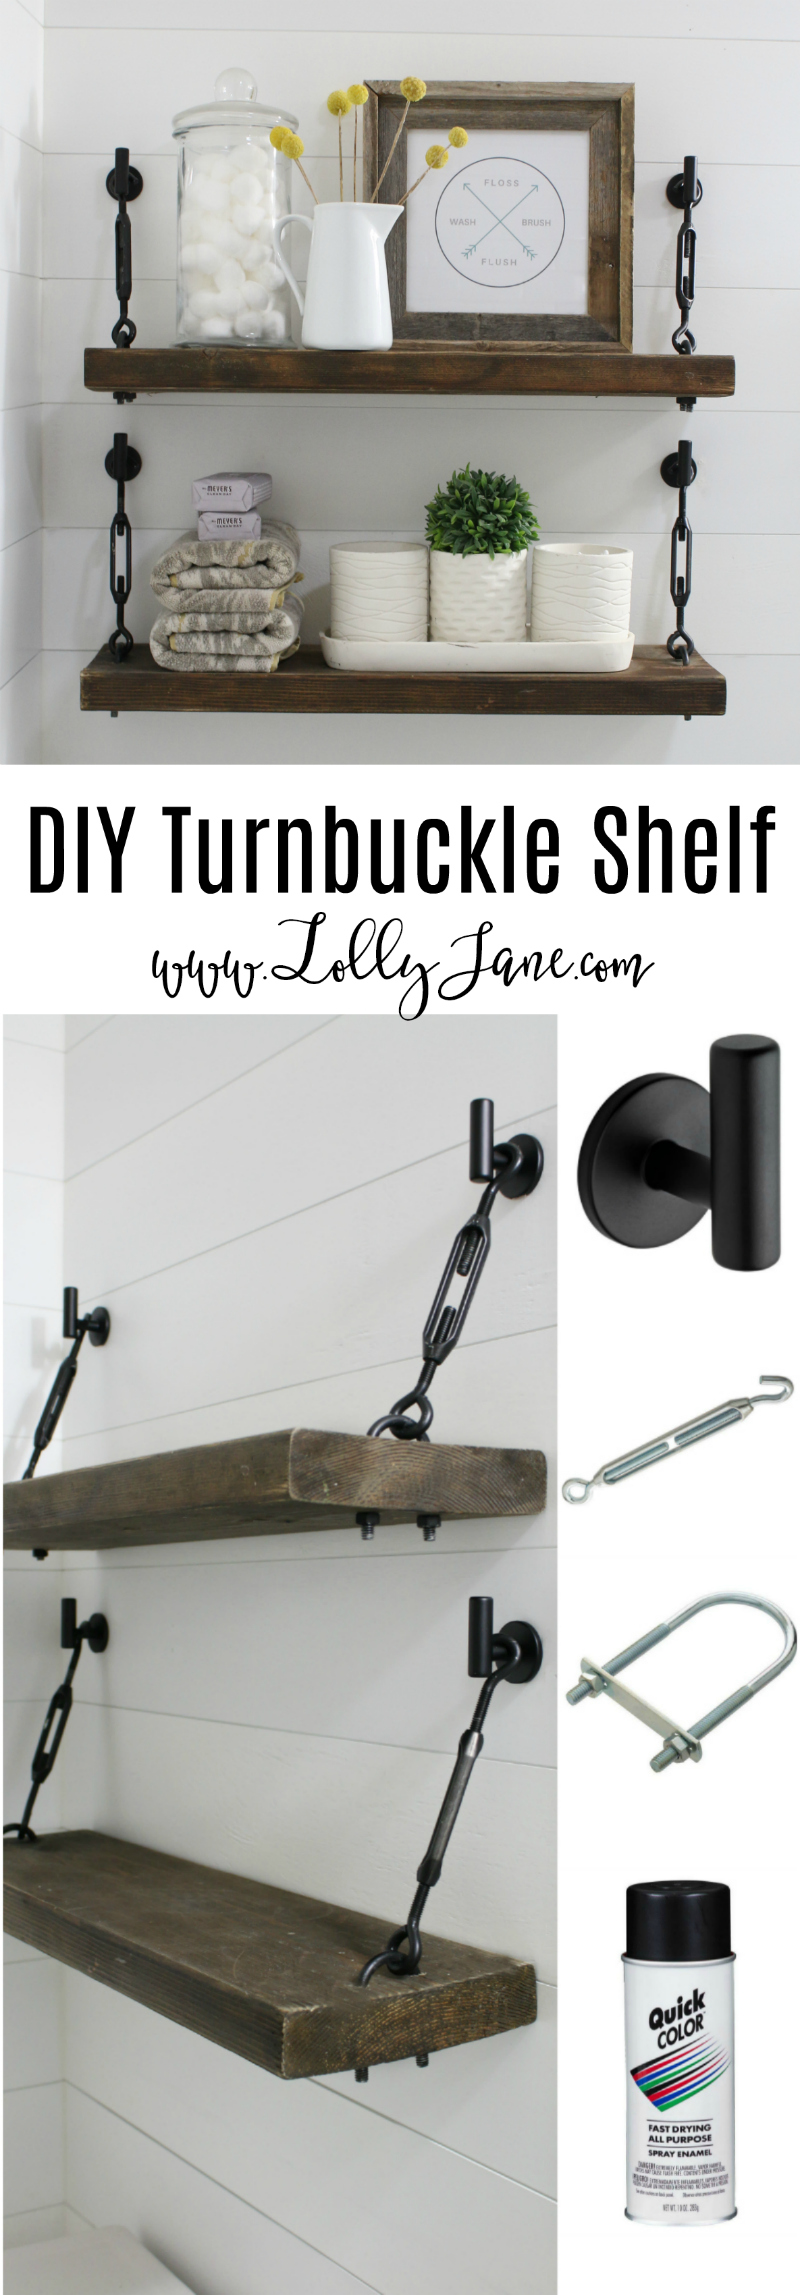 Diy Turnbuckle Shelf A Great Bathroom, Turnbuckle Shelf Brackets For Floating Shelves